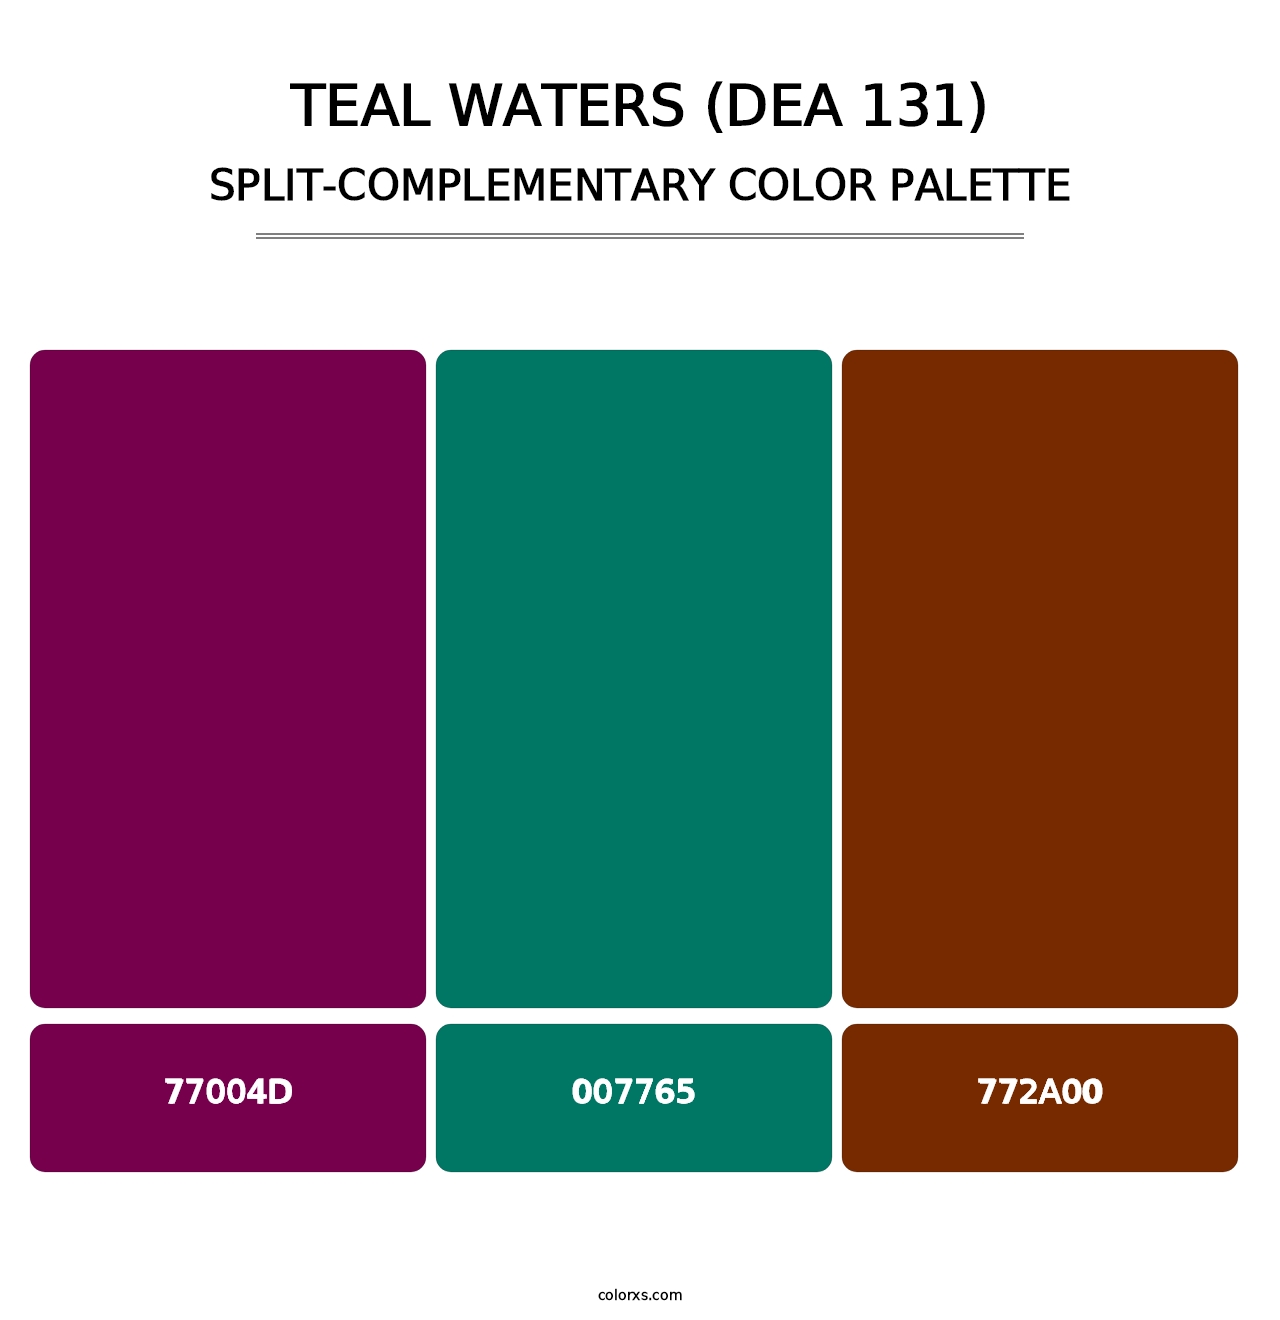 Teal Waters (DEA 131) - Split-Complementary Color Palette